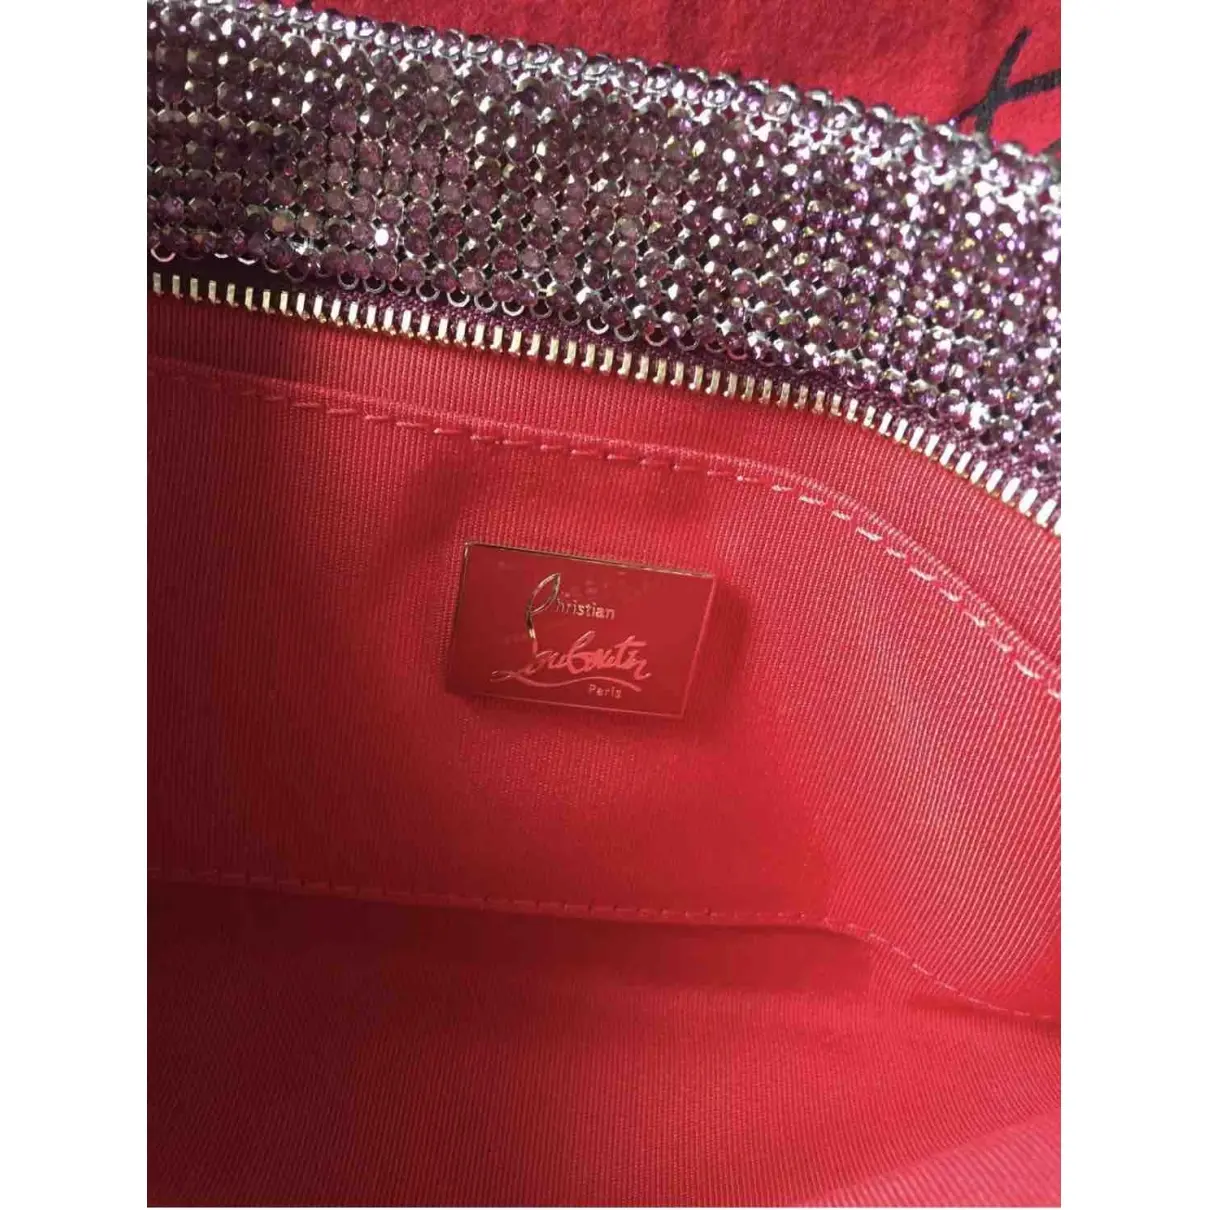 Buy Christian Louboutin Glitter clutch bag online